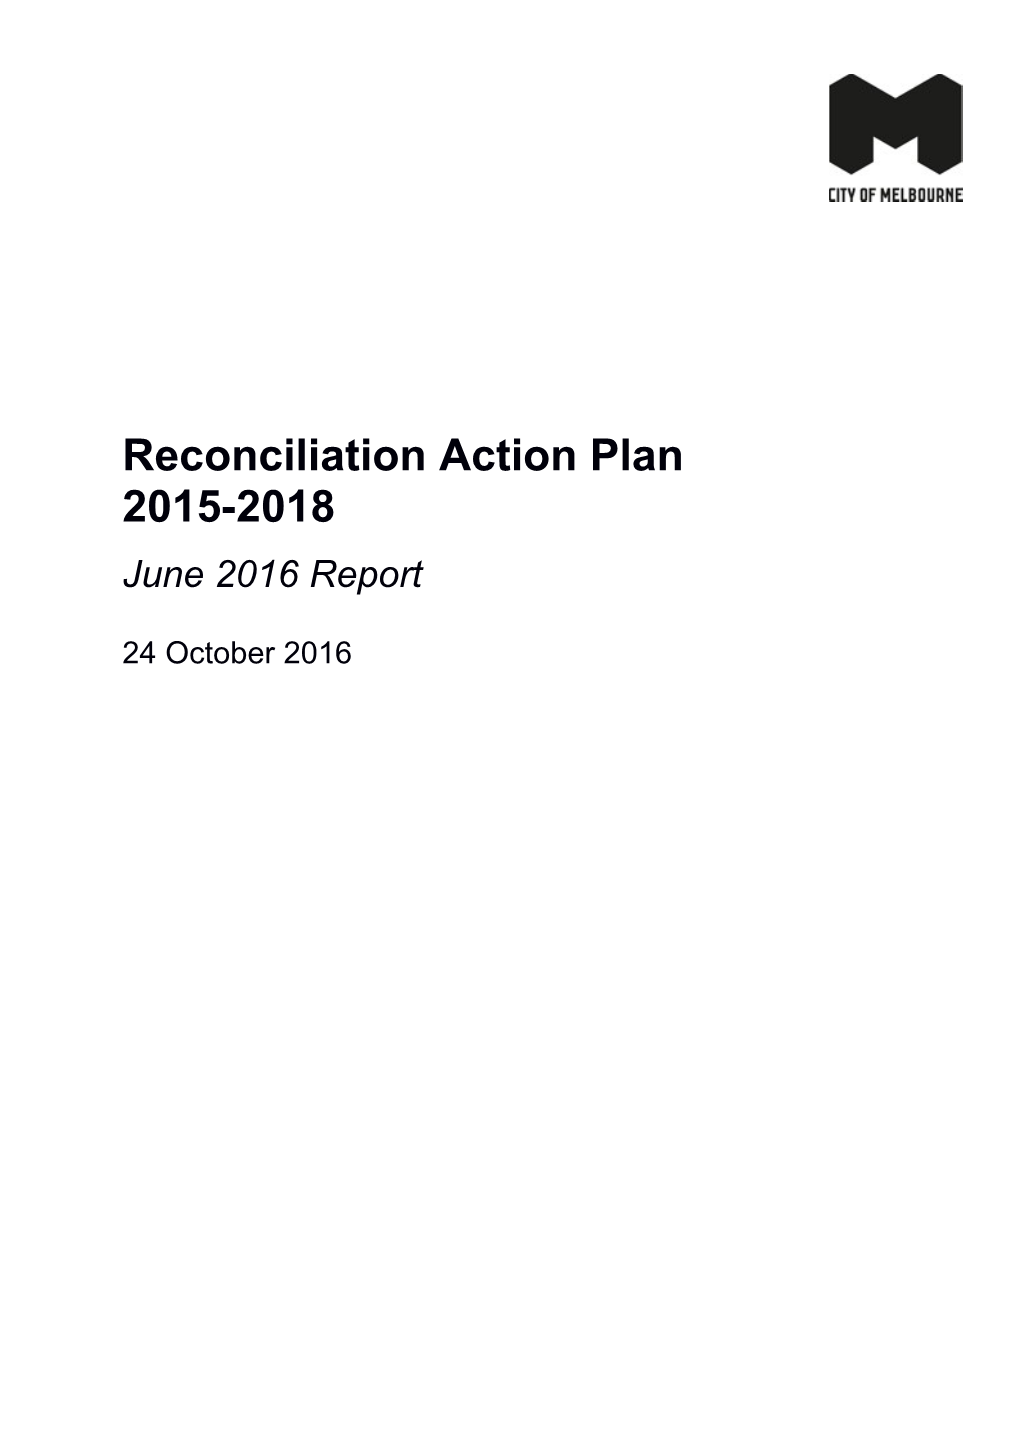 Reconciliation Action Plan Progress Report 2015-16